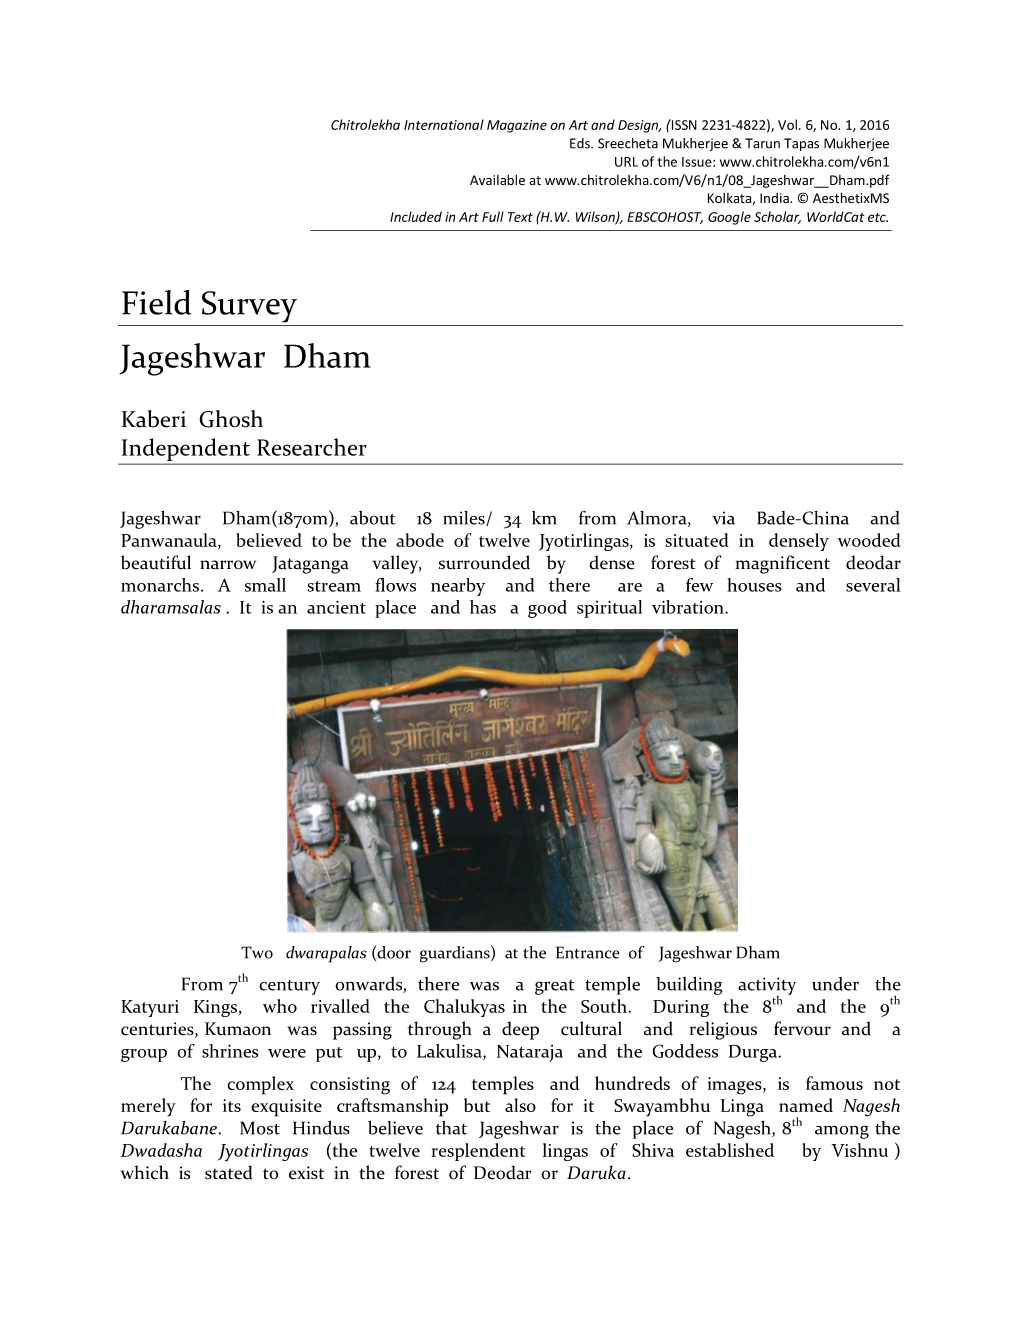 Field Survey Jageshwar Dham